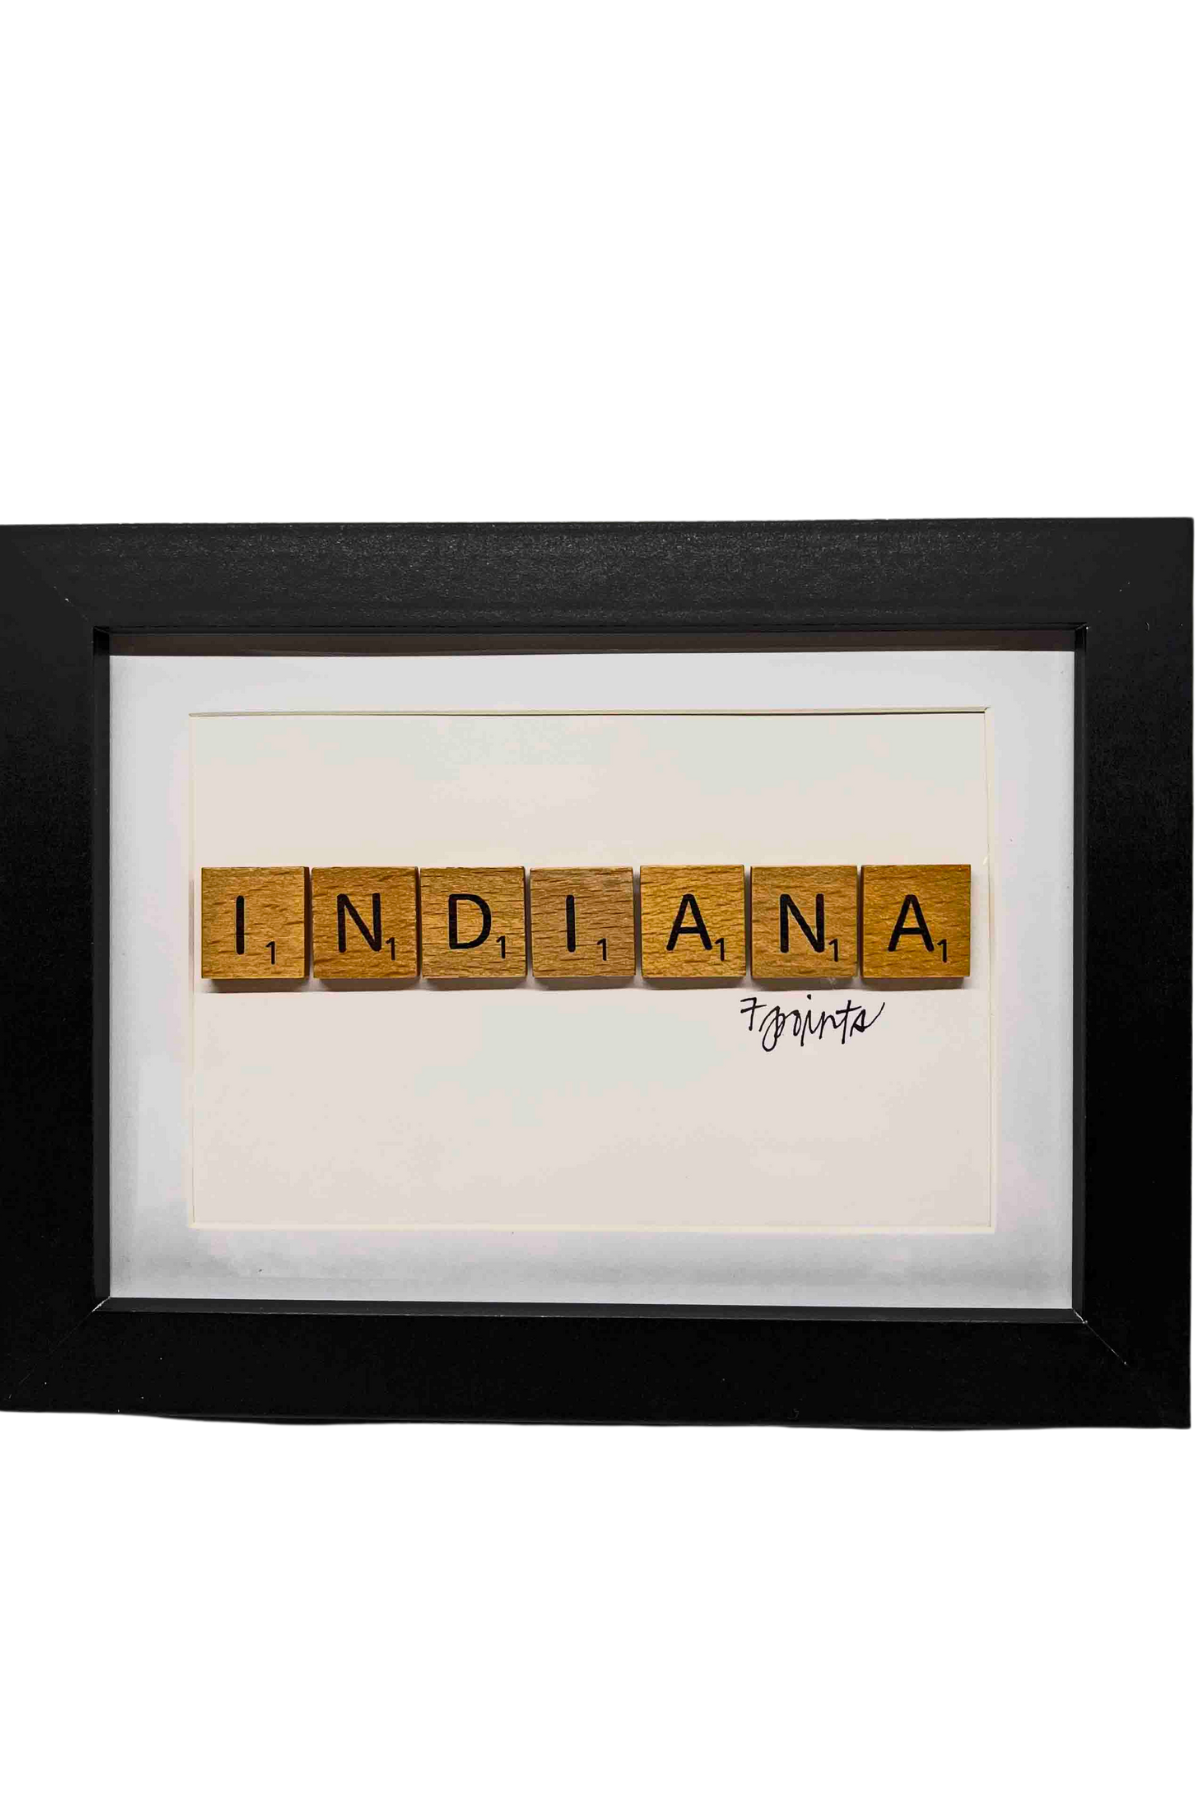 Indiana Scrabble Word Frame by Wordz in Framez